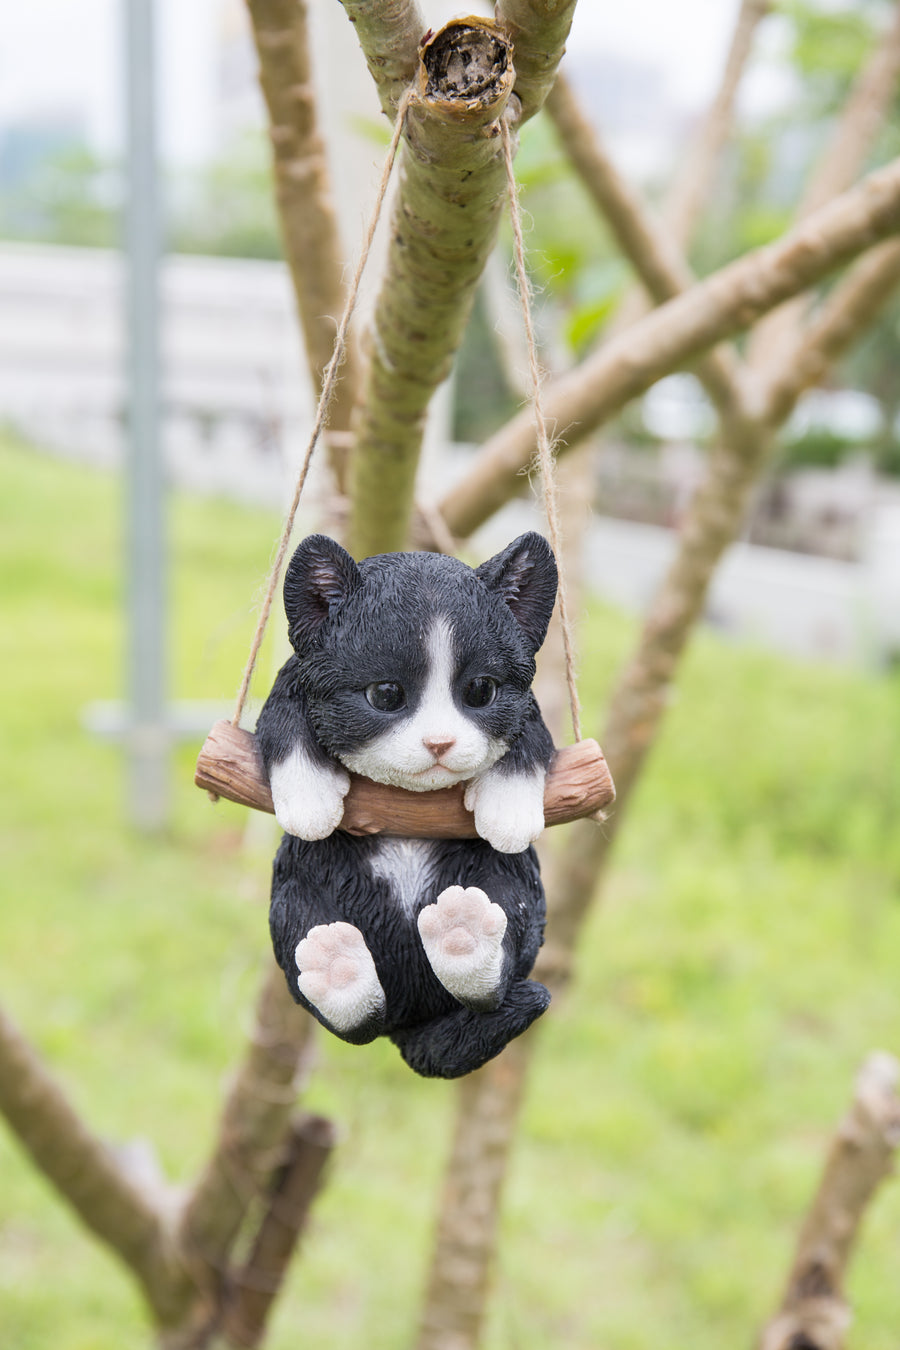 Pet Pals- Black and White Kitten Hanging Statue HI-LINE GIFT LTD.